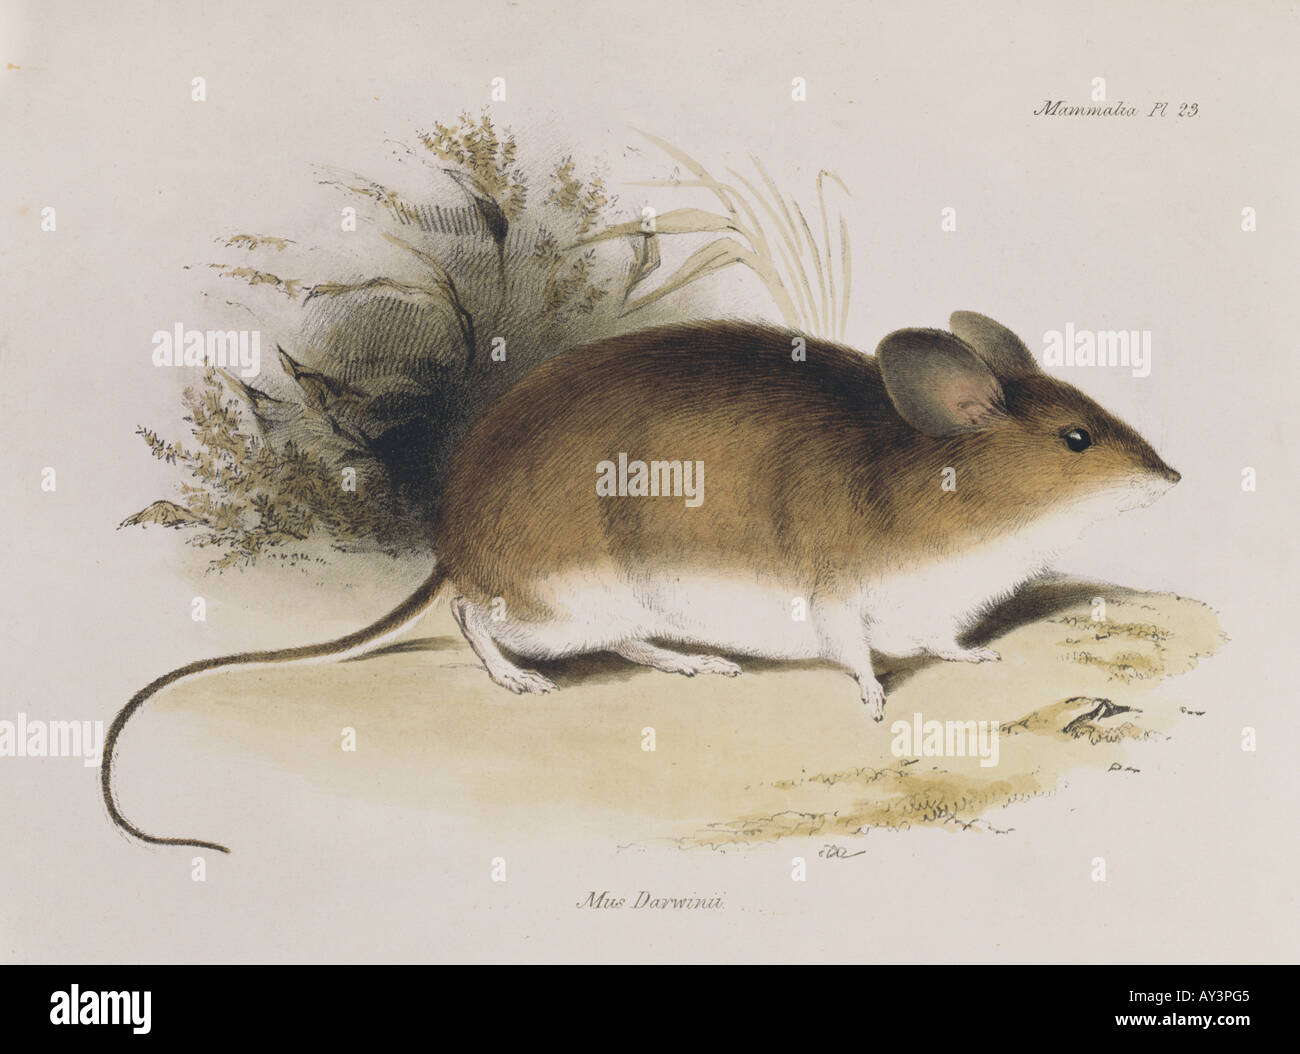 Mus darwinii Darwin's mouse Stock Photo